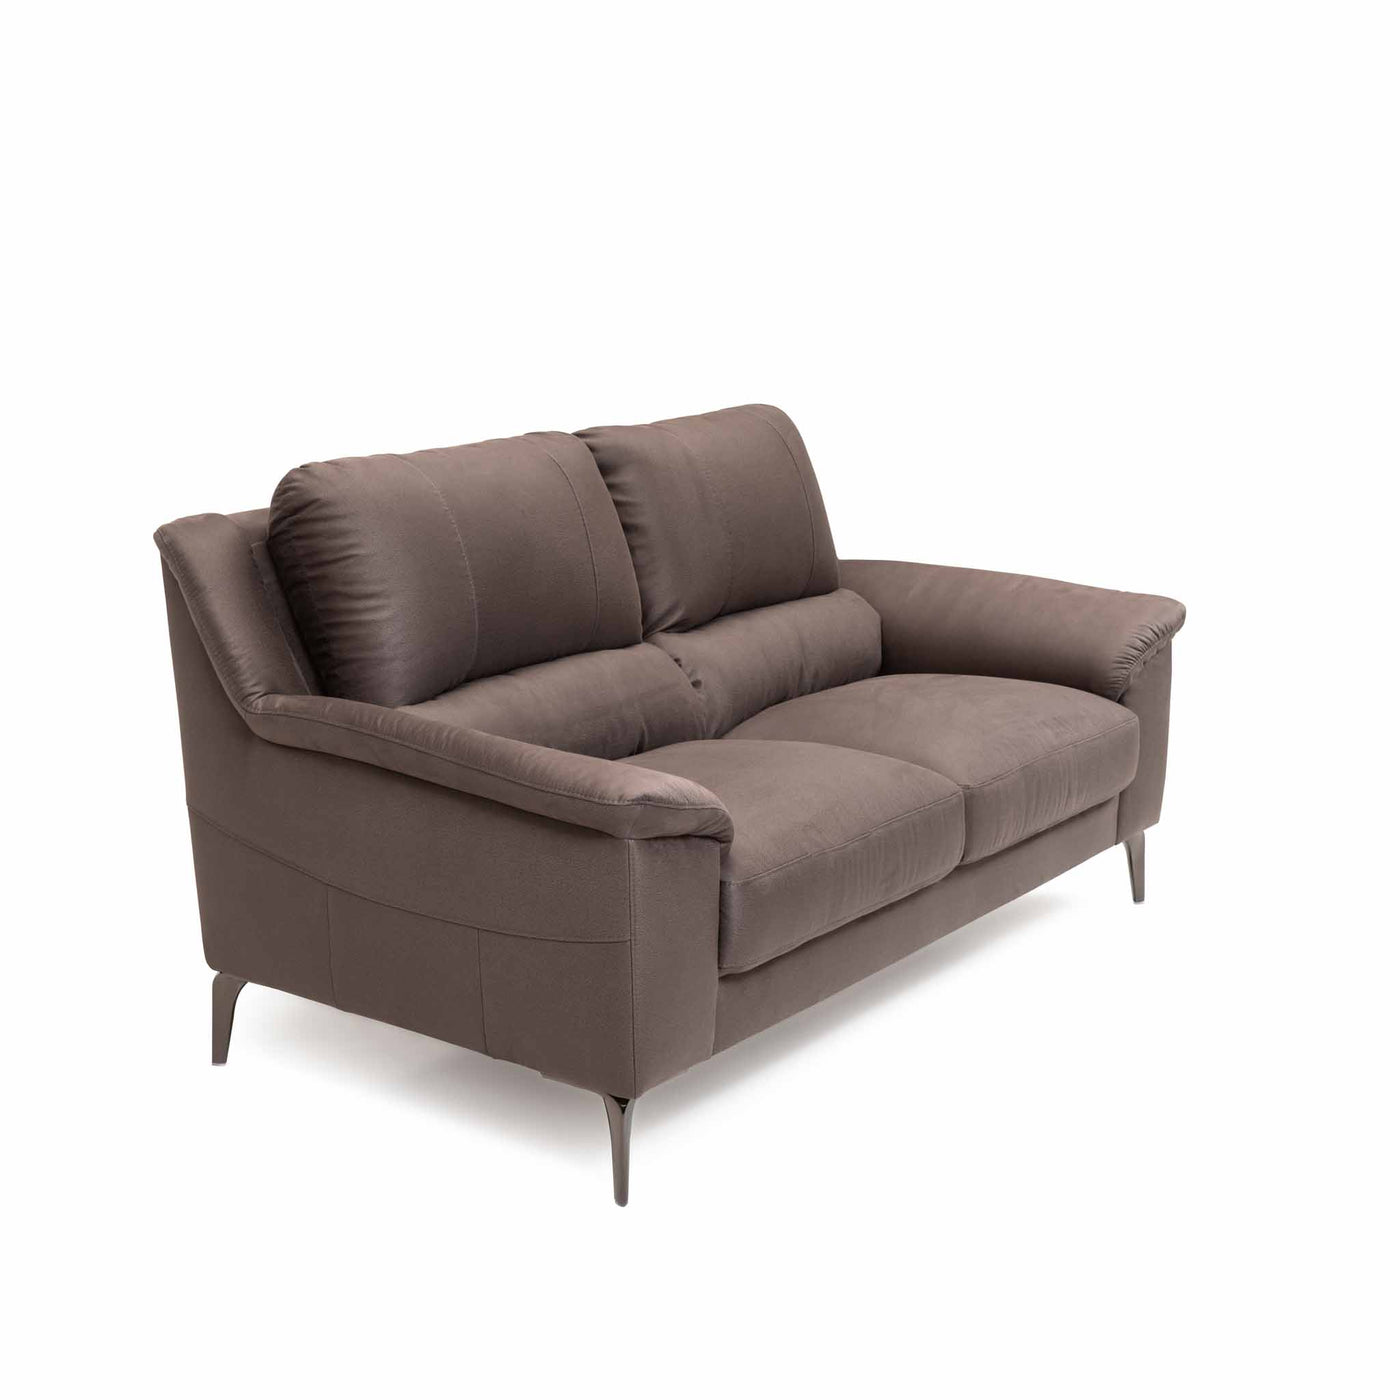 Agersø 2 pers. sofa i nubuck-look stof fra Hjort Knudsen